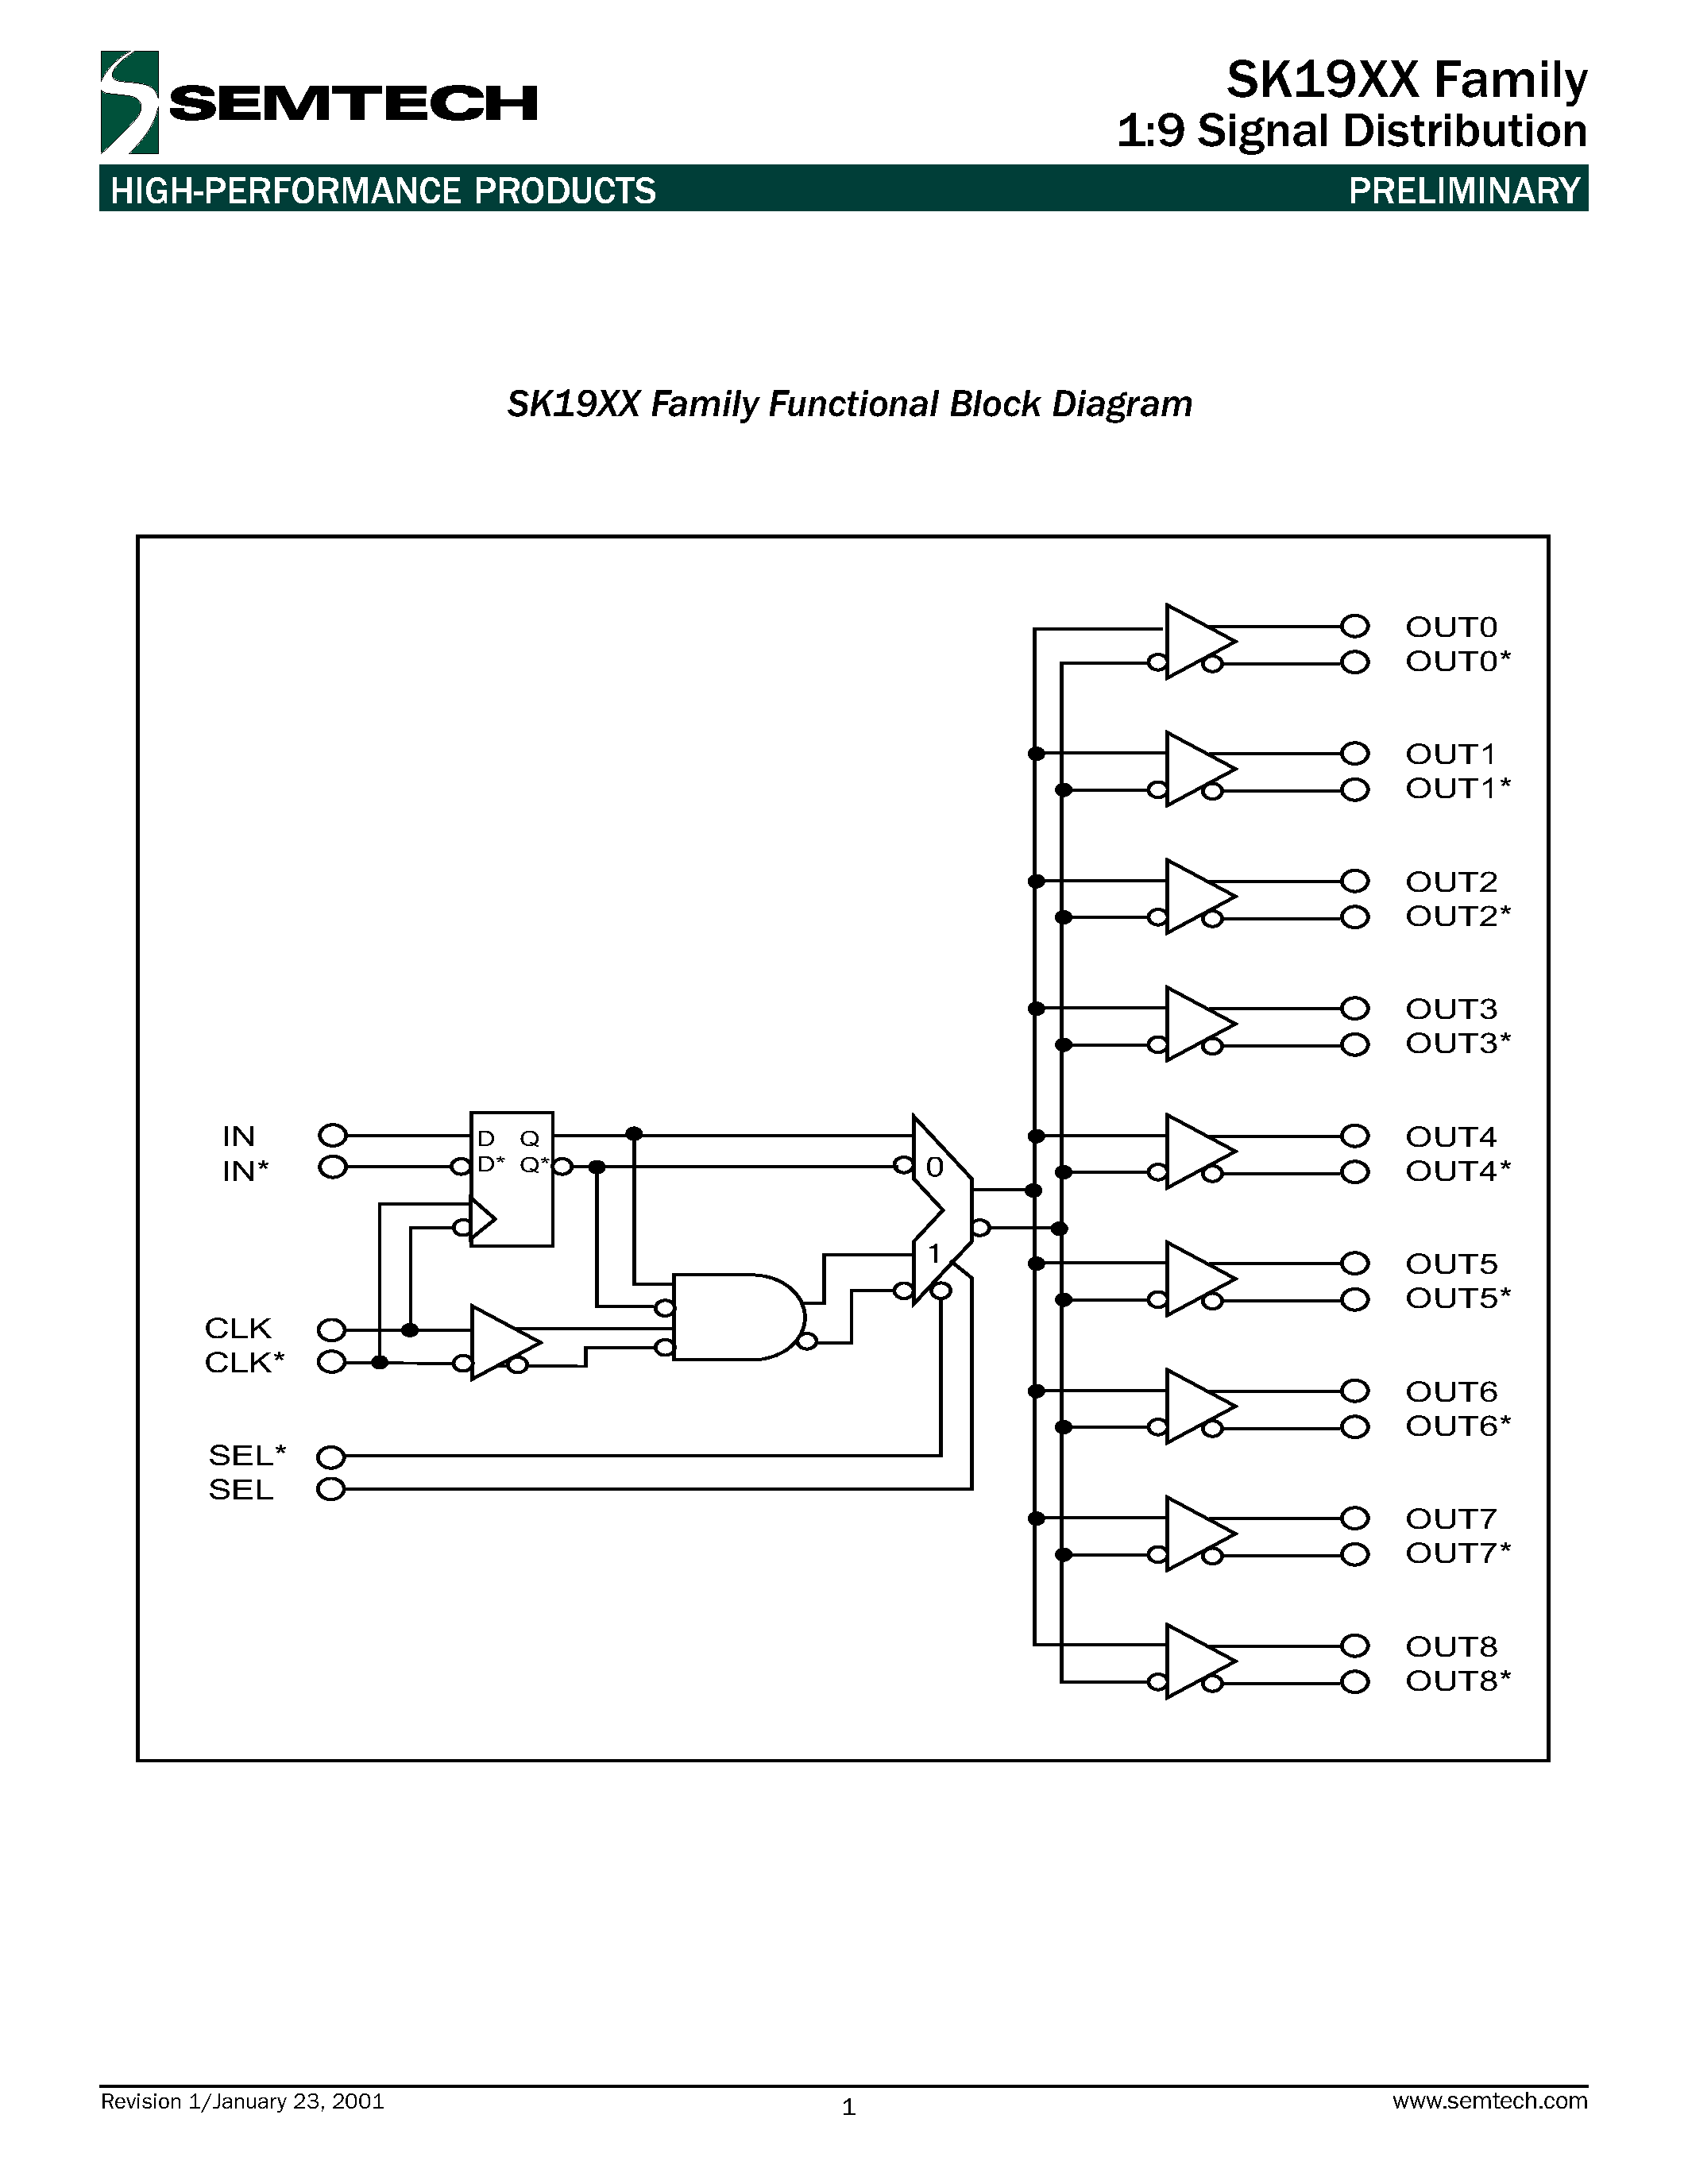 Datasheet SK1901 - 1:9 Signal Distribution page 1